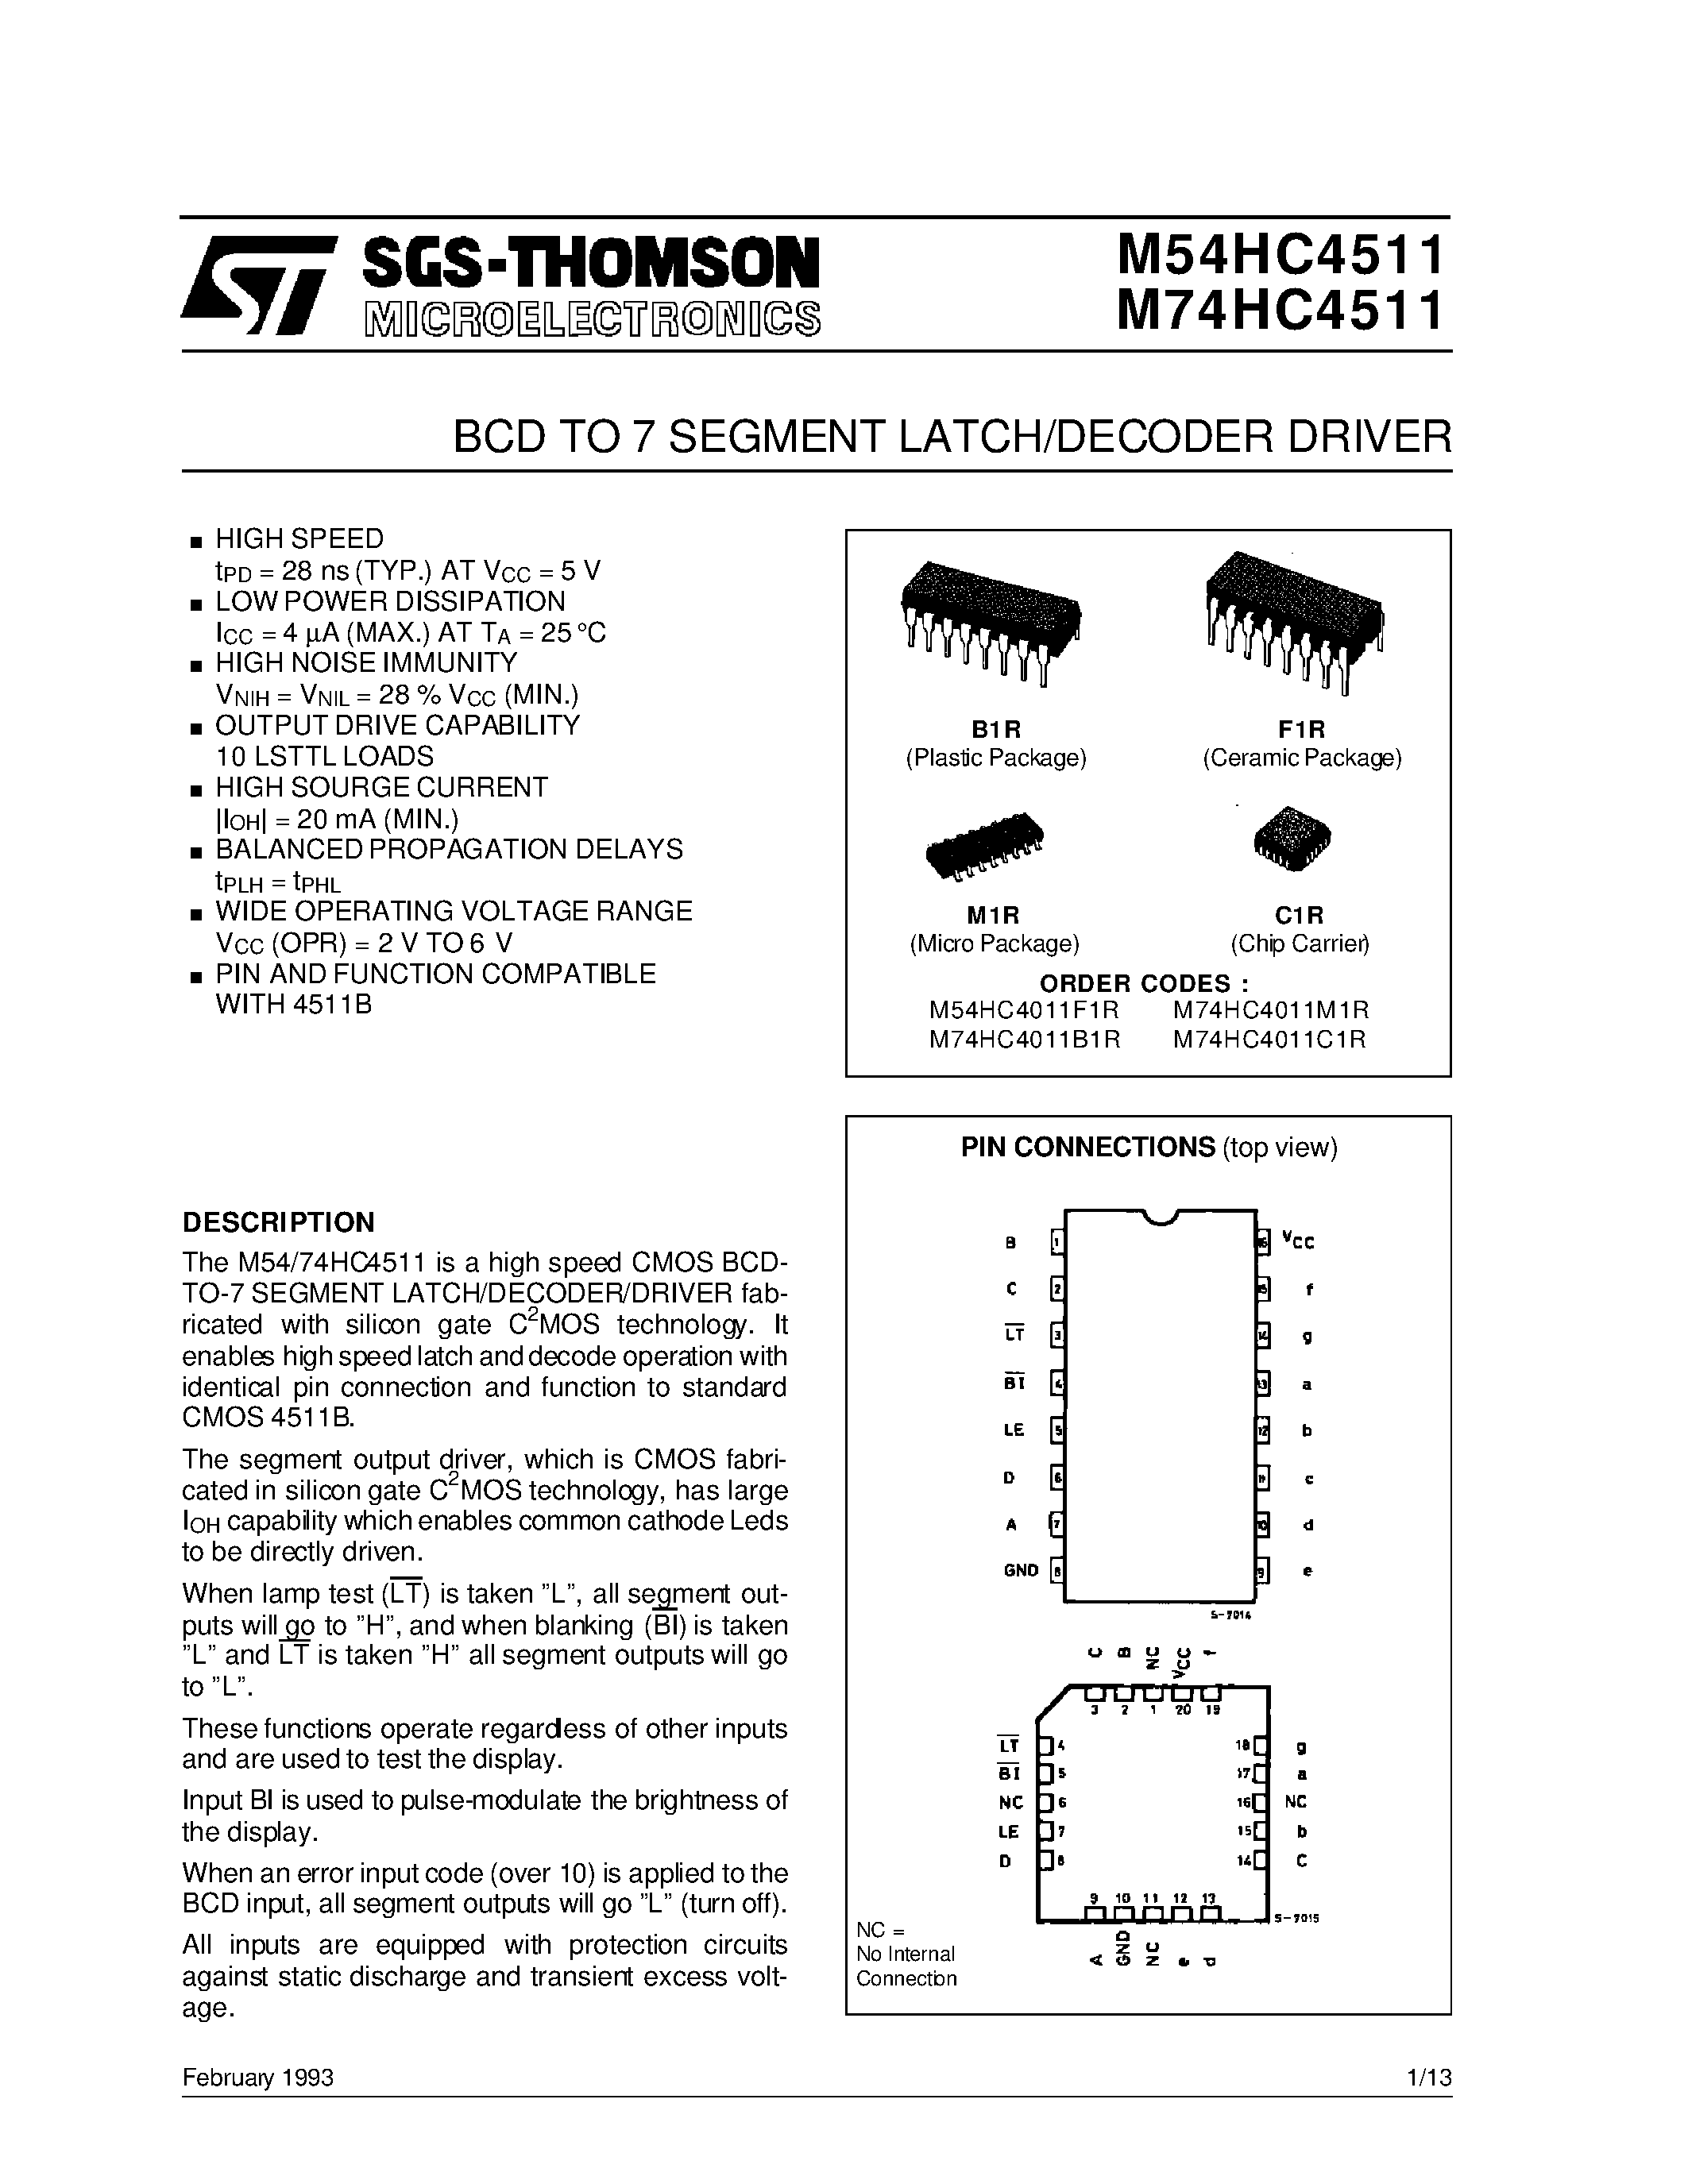 Datasheet M74HC4011M1R - BCD TO 7 SEGMENT LATCH/DECODER DRIVER page 1